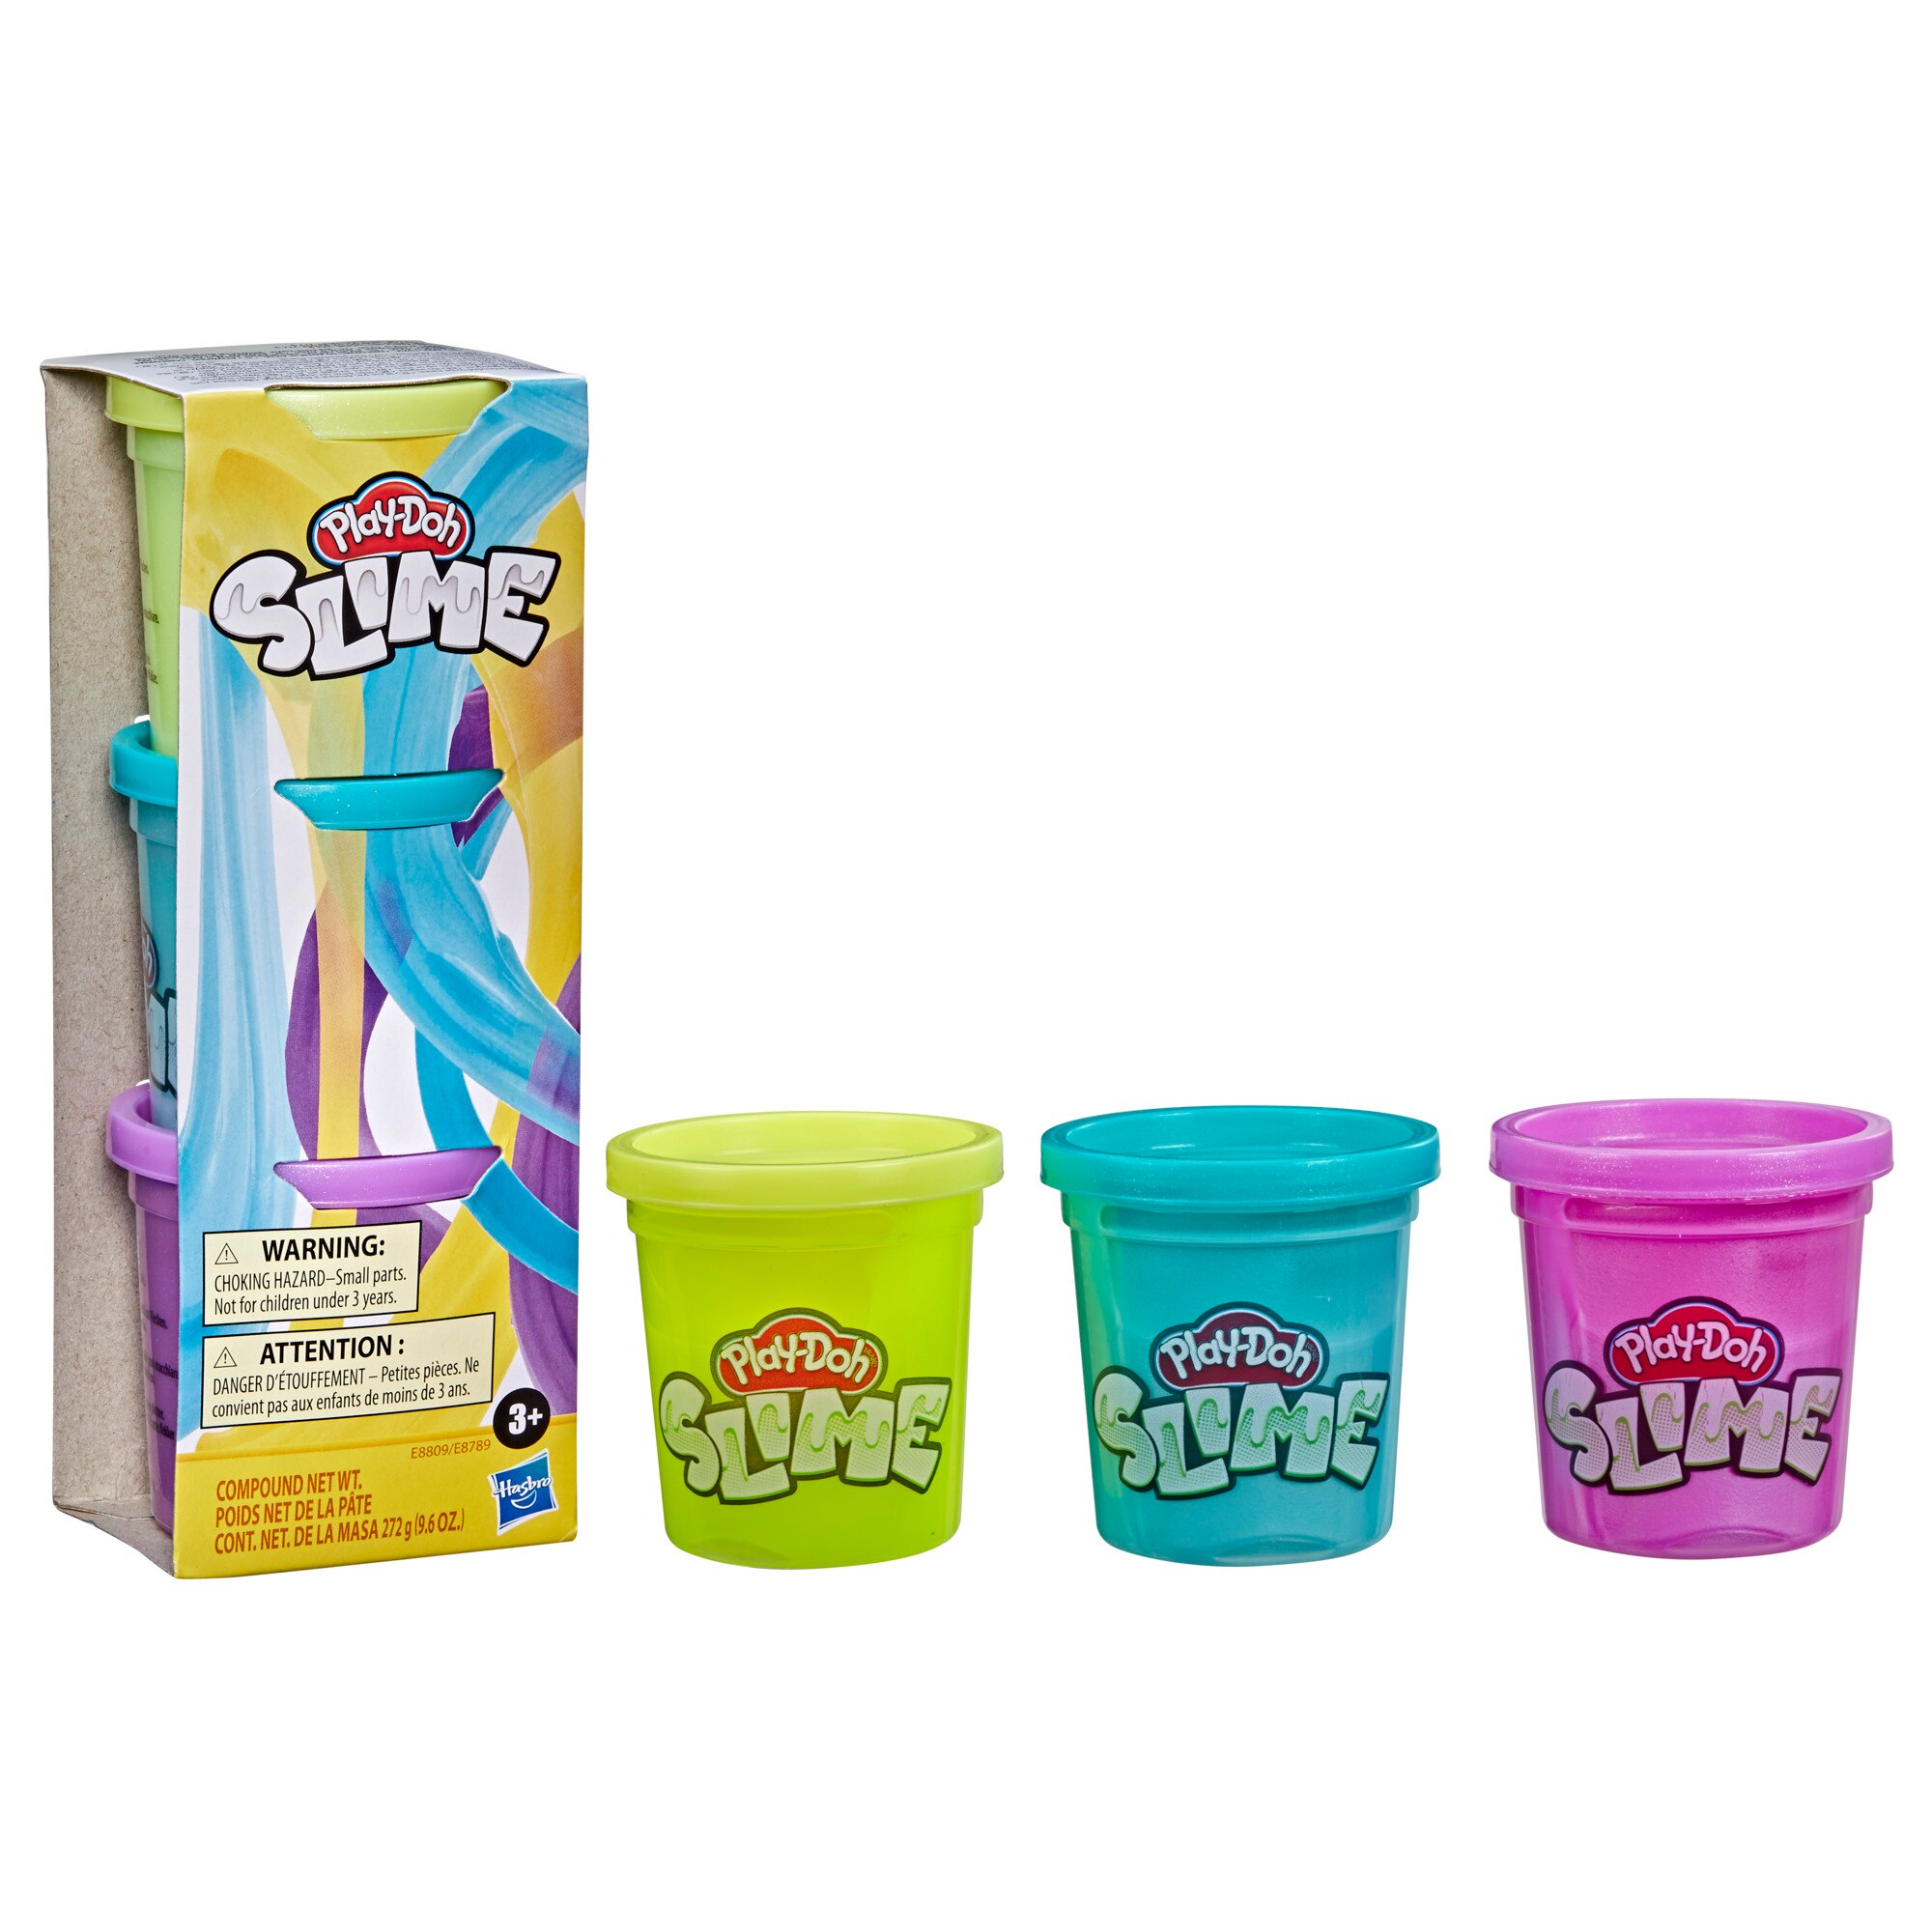 Play-Doh Slime 3-Pack Assortment , CVS